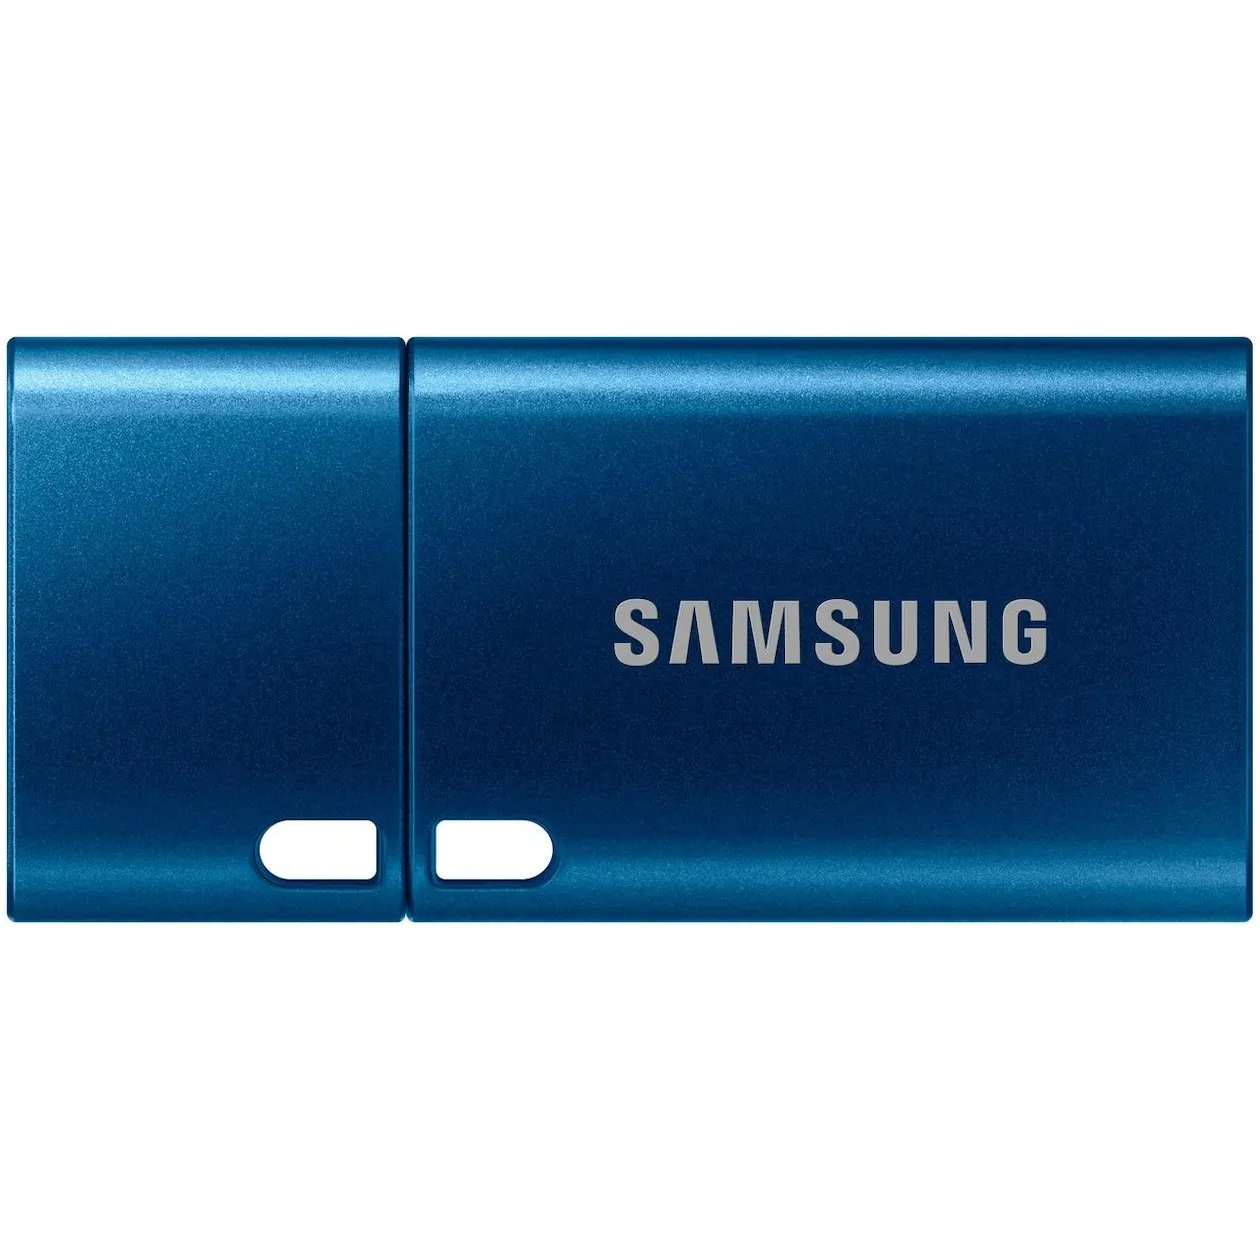 Samsung USB-C Flash Drive 256GB Blauw